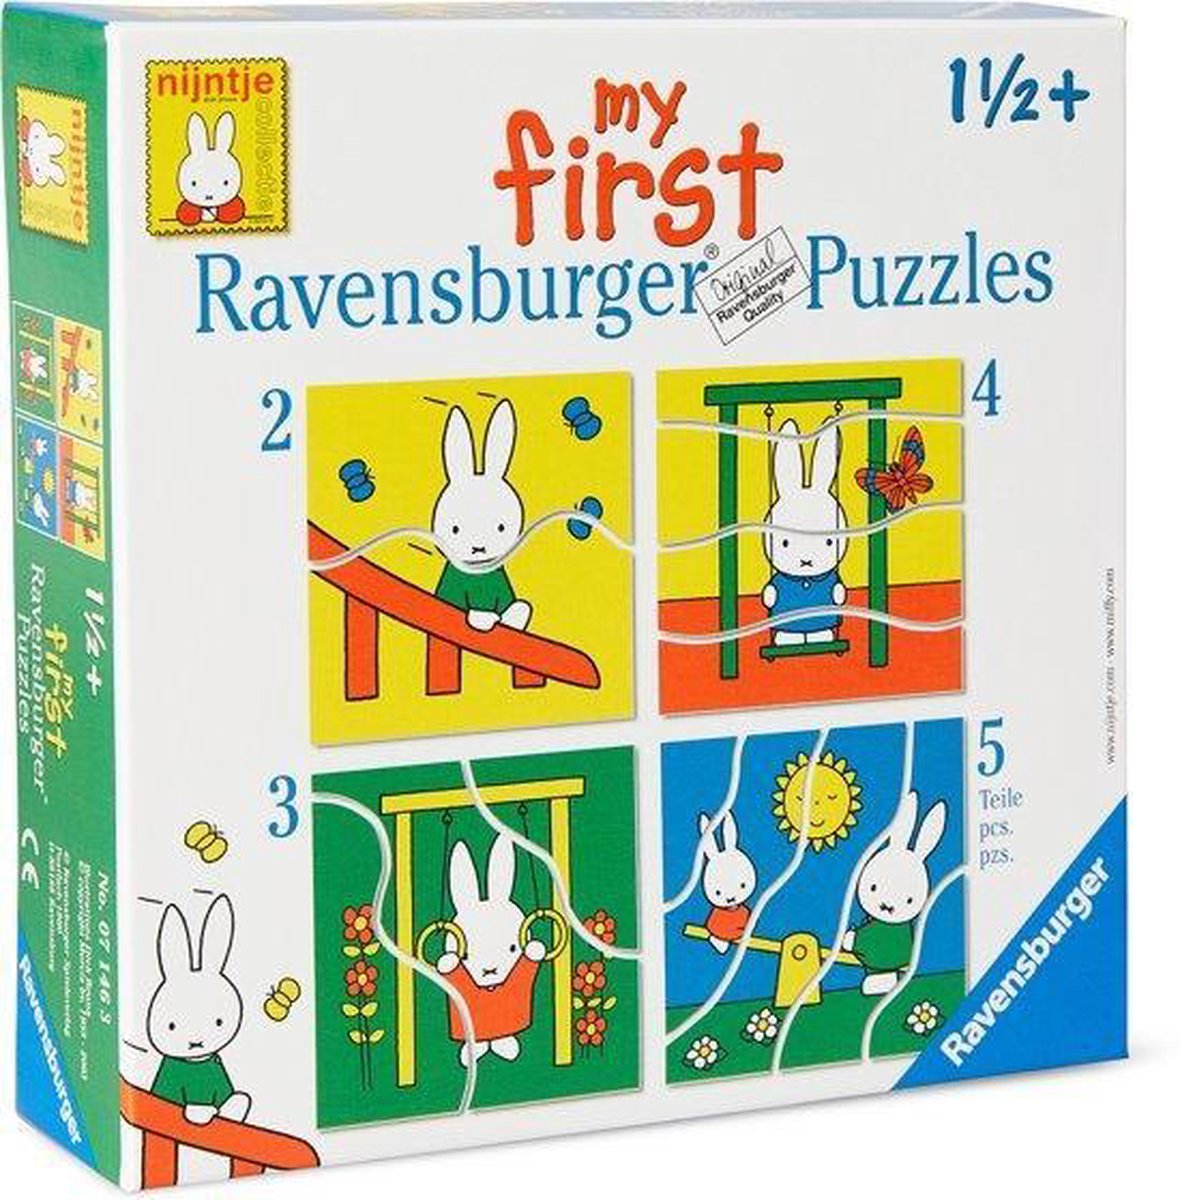 Ravensburger nijntje My First Puzzels -2+3+4+5 stukjes - kinderpuzzel - Ravensburger